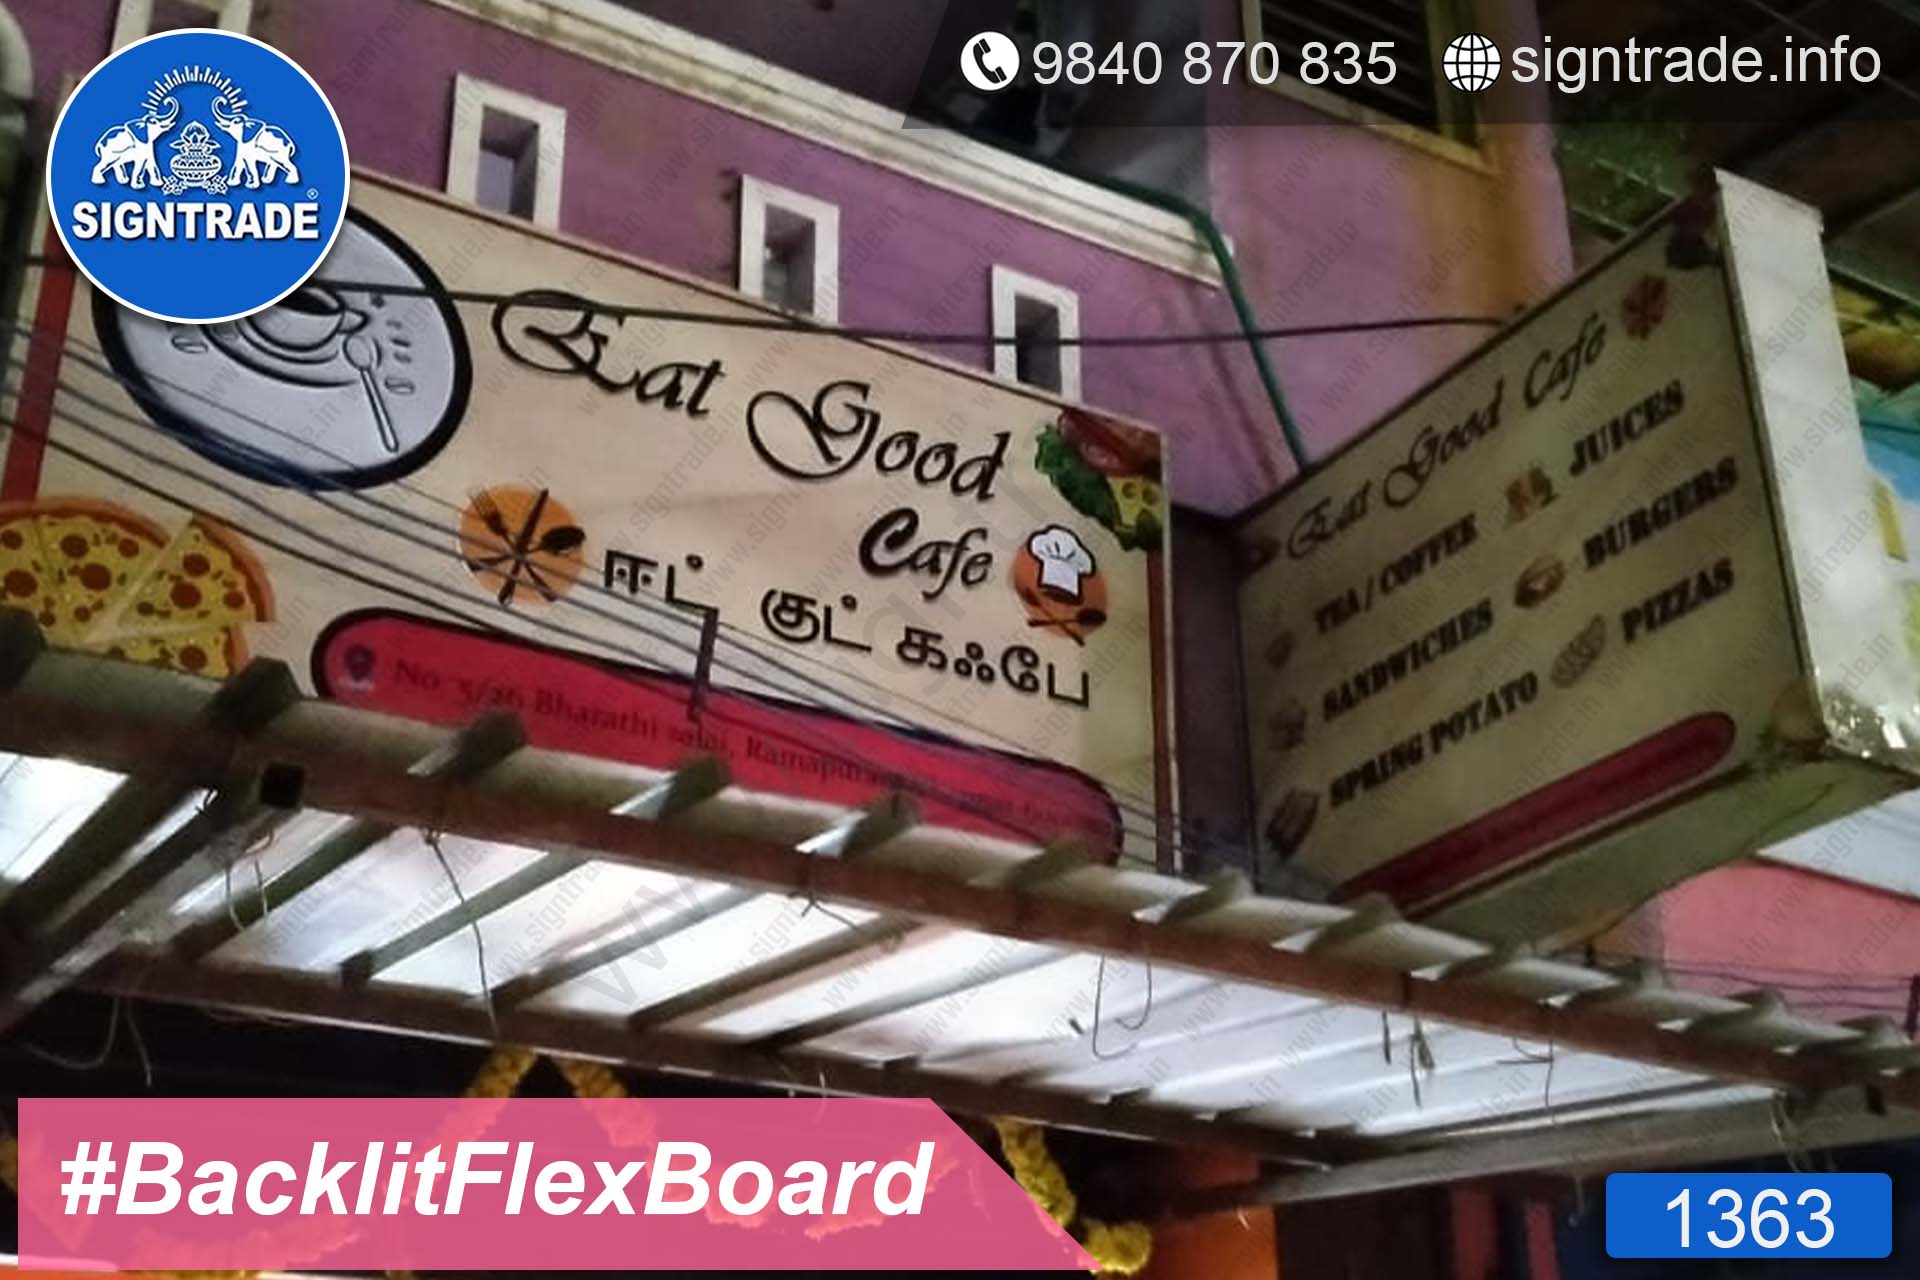 Eat Good Cafe - Chennai - SIGNTRADE - Backlit Flex Board Manufactures in Chennai